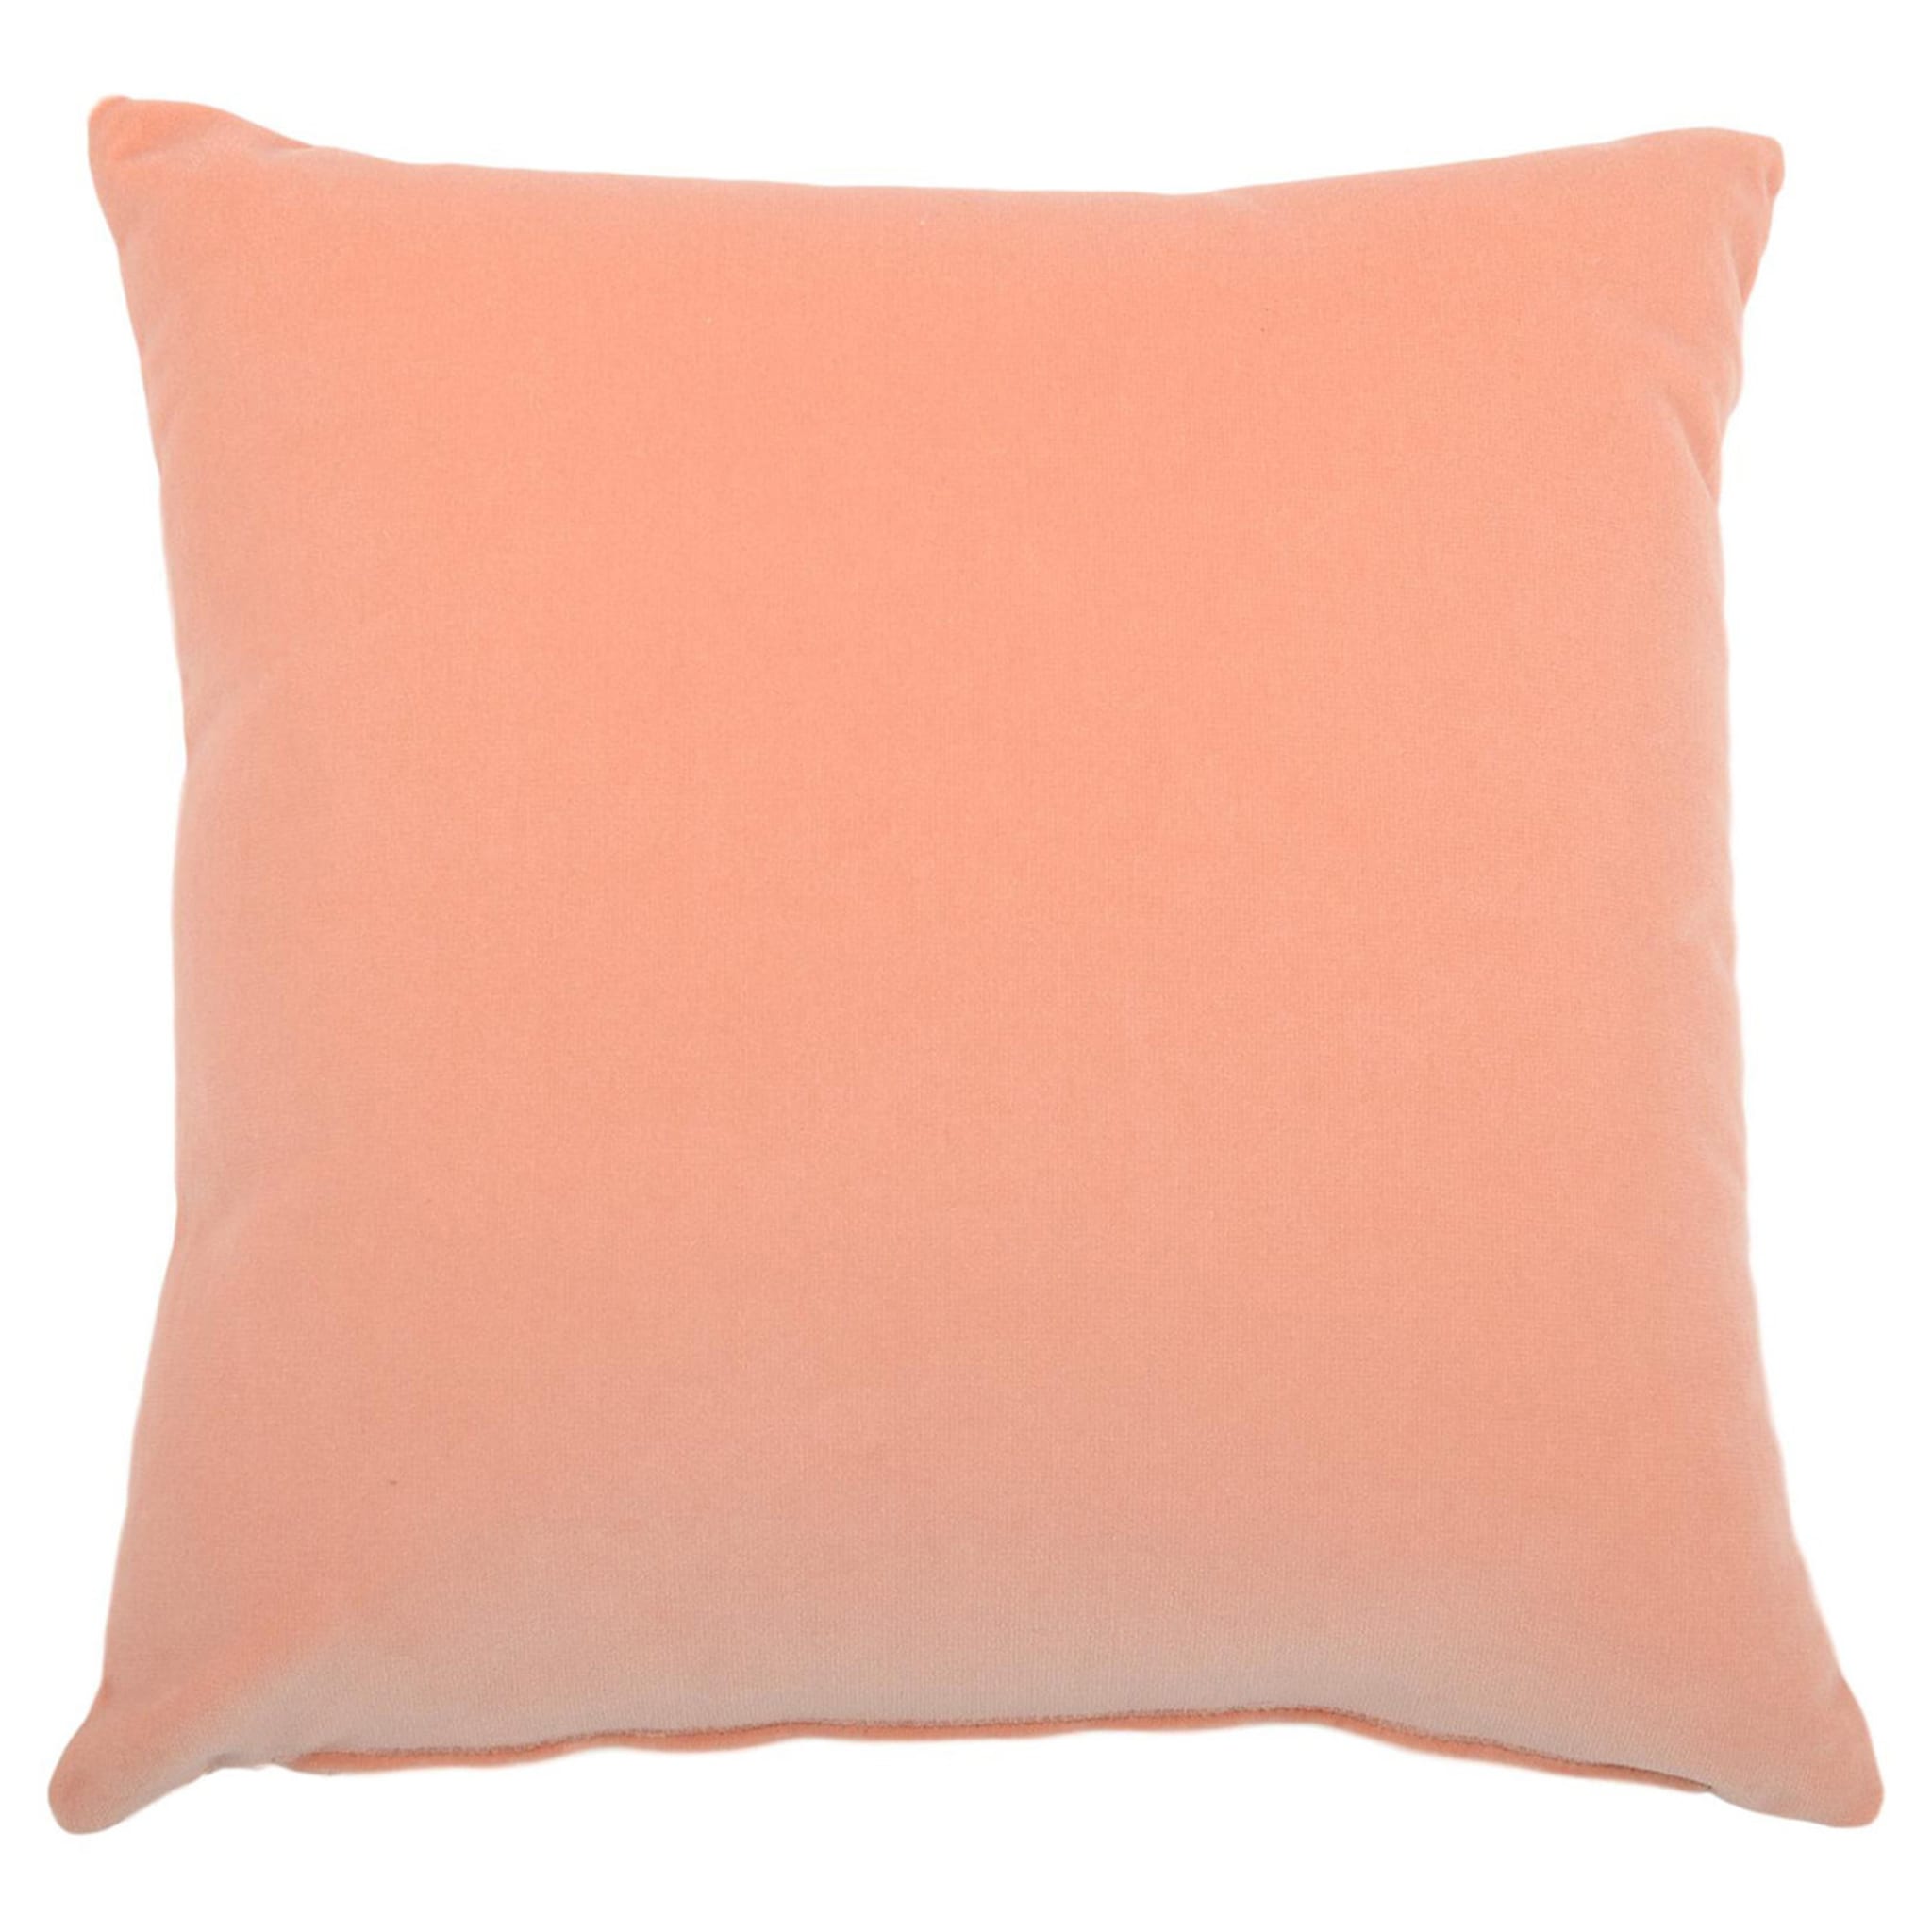 Peach Carrè Cushion in Steila jacquard fabric - Alternative view 2